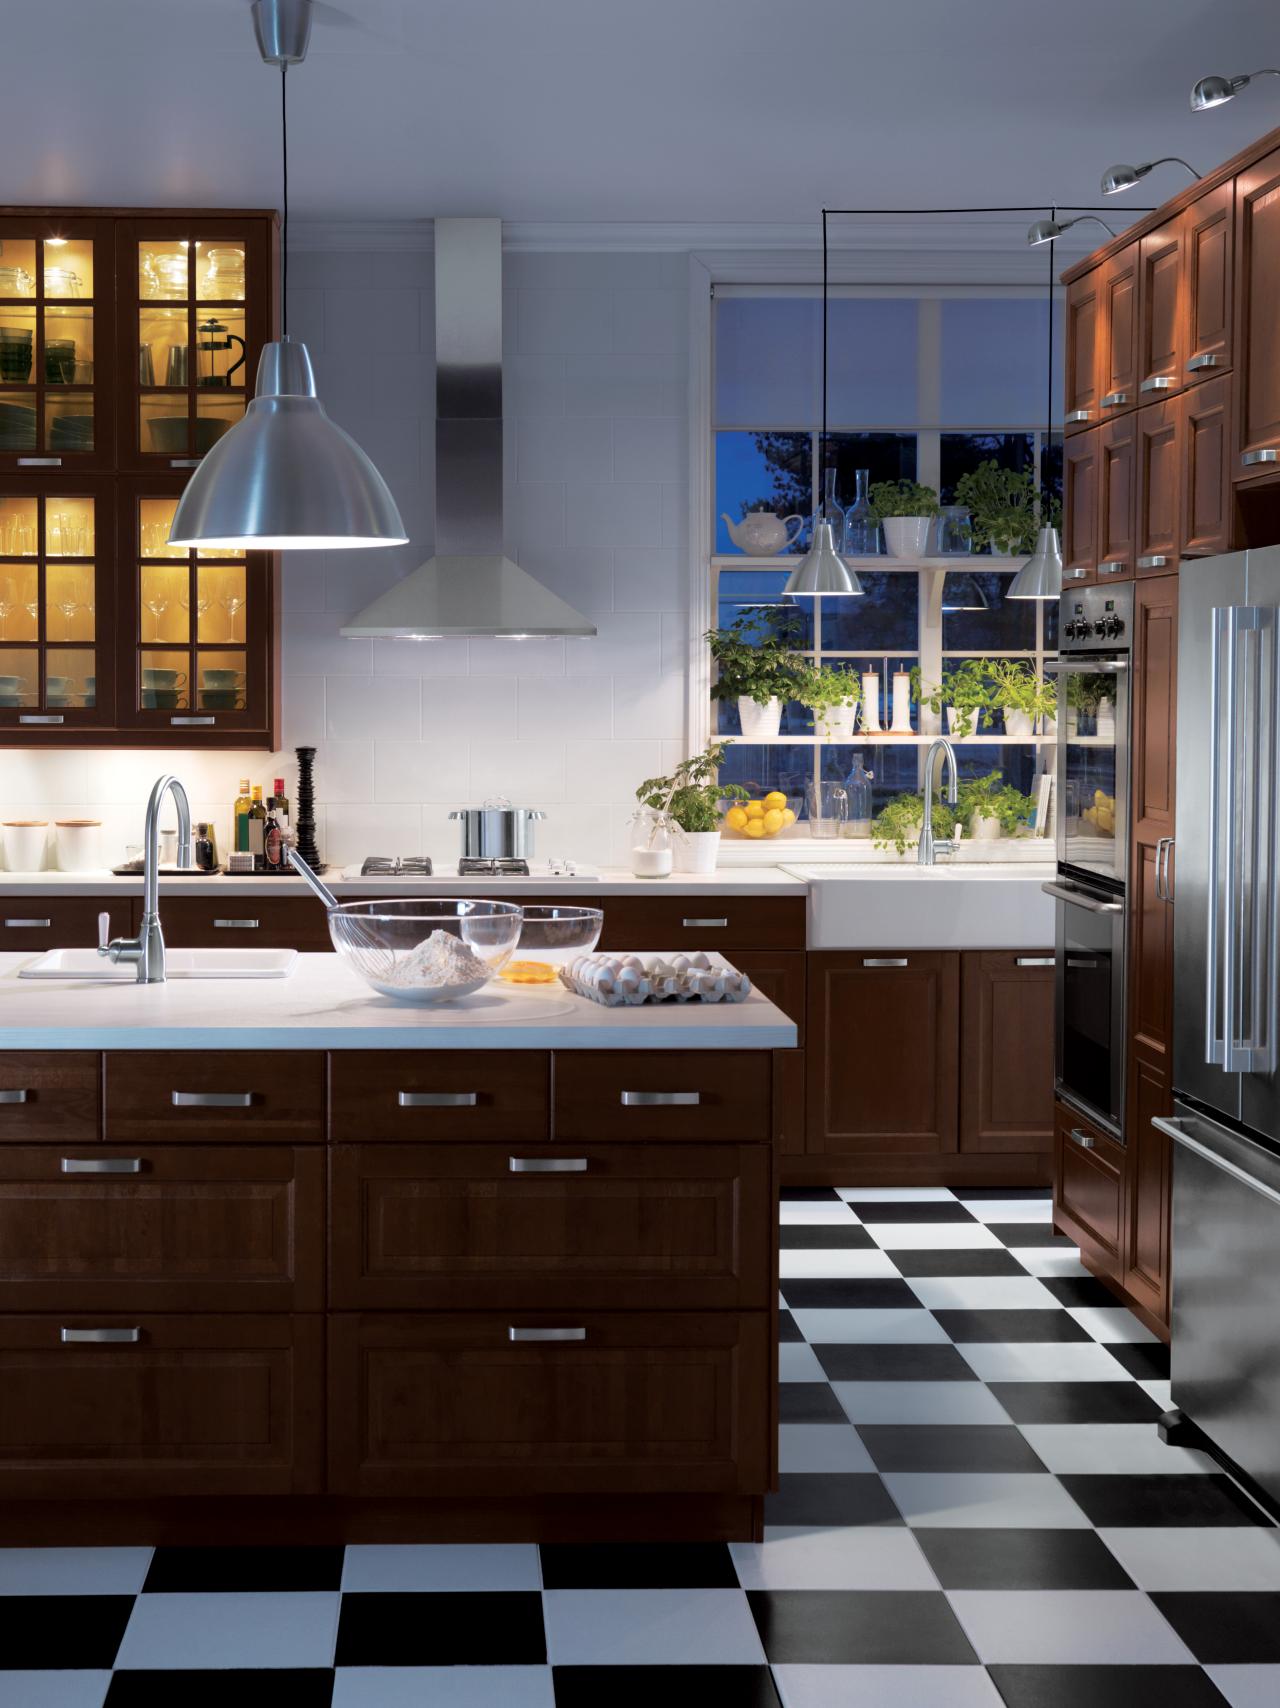 checkered-kitchen-floors-white-cabinets